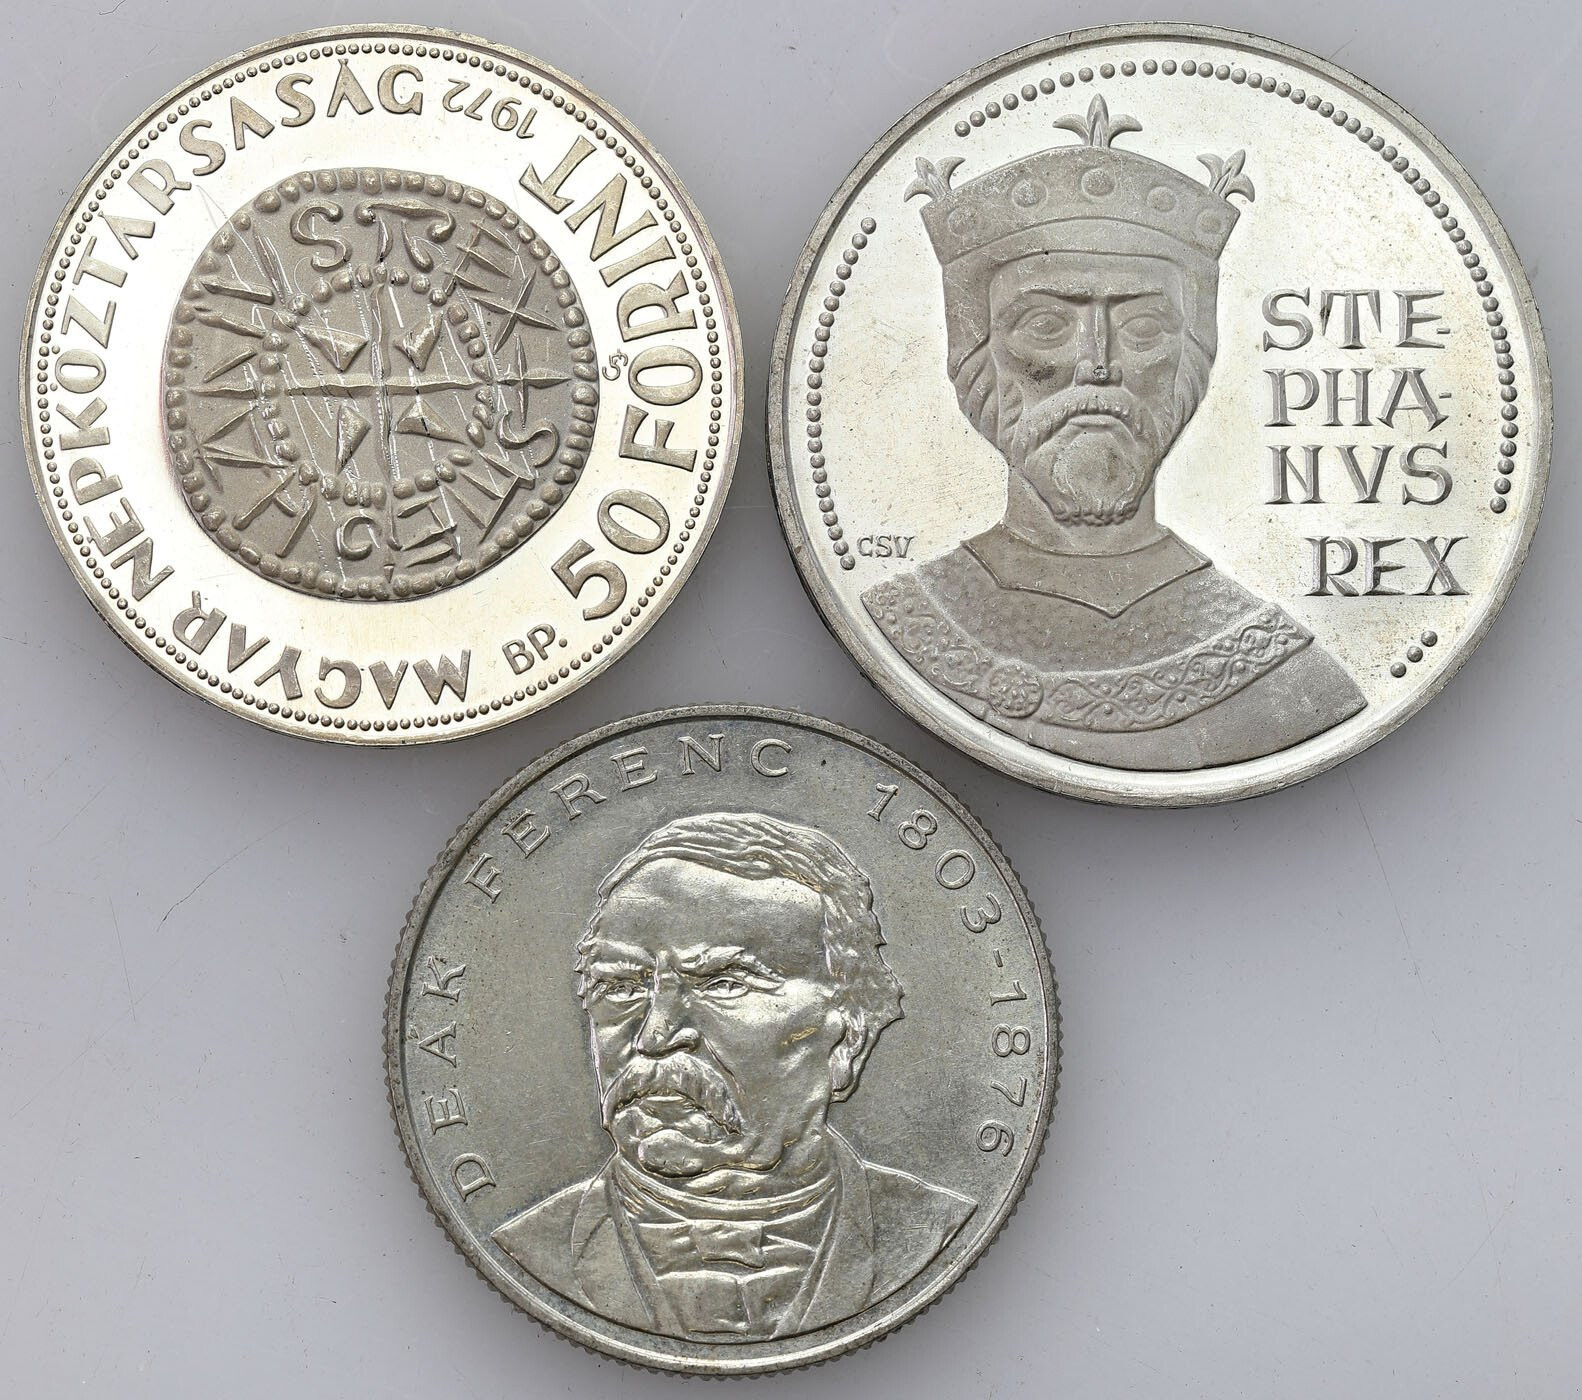 Węgry. 50, 100 forint 1972 i 200 forint 1994, zestaw 4 monet